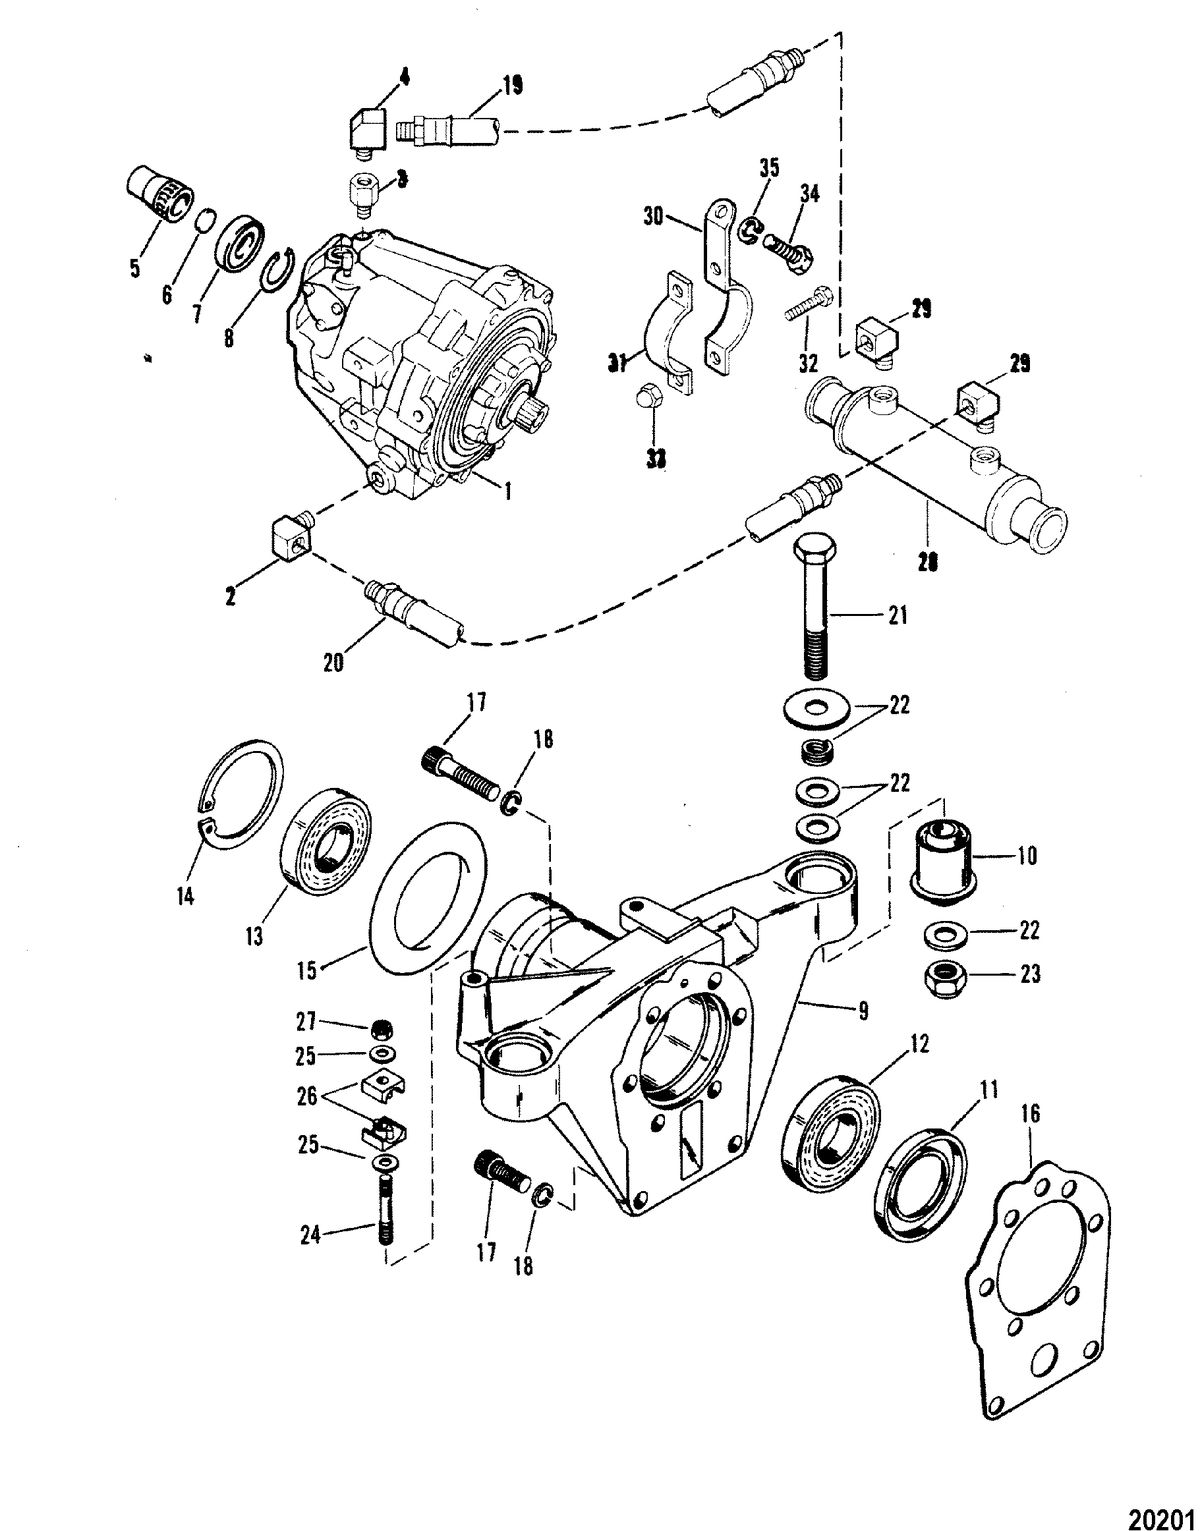 MERCRUISER 330 H.P. ENGINE W/BORG WARNER Transmission and Tailstock